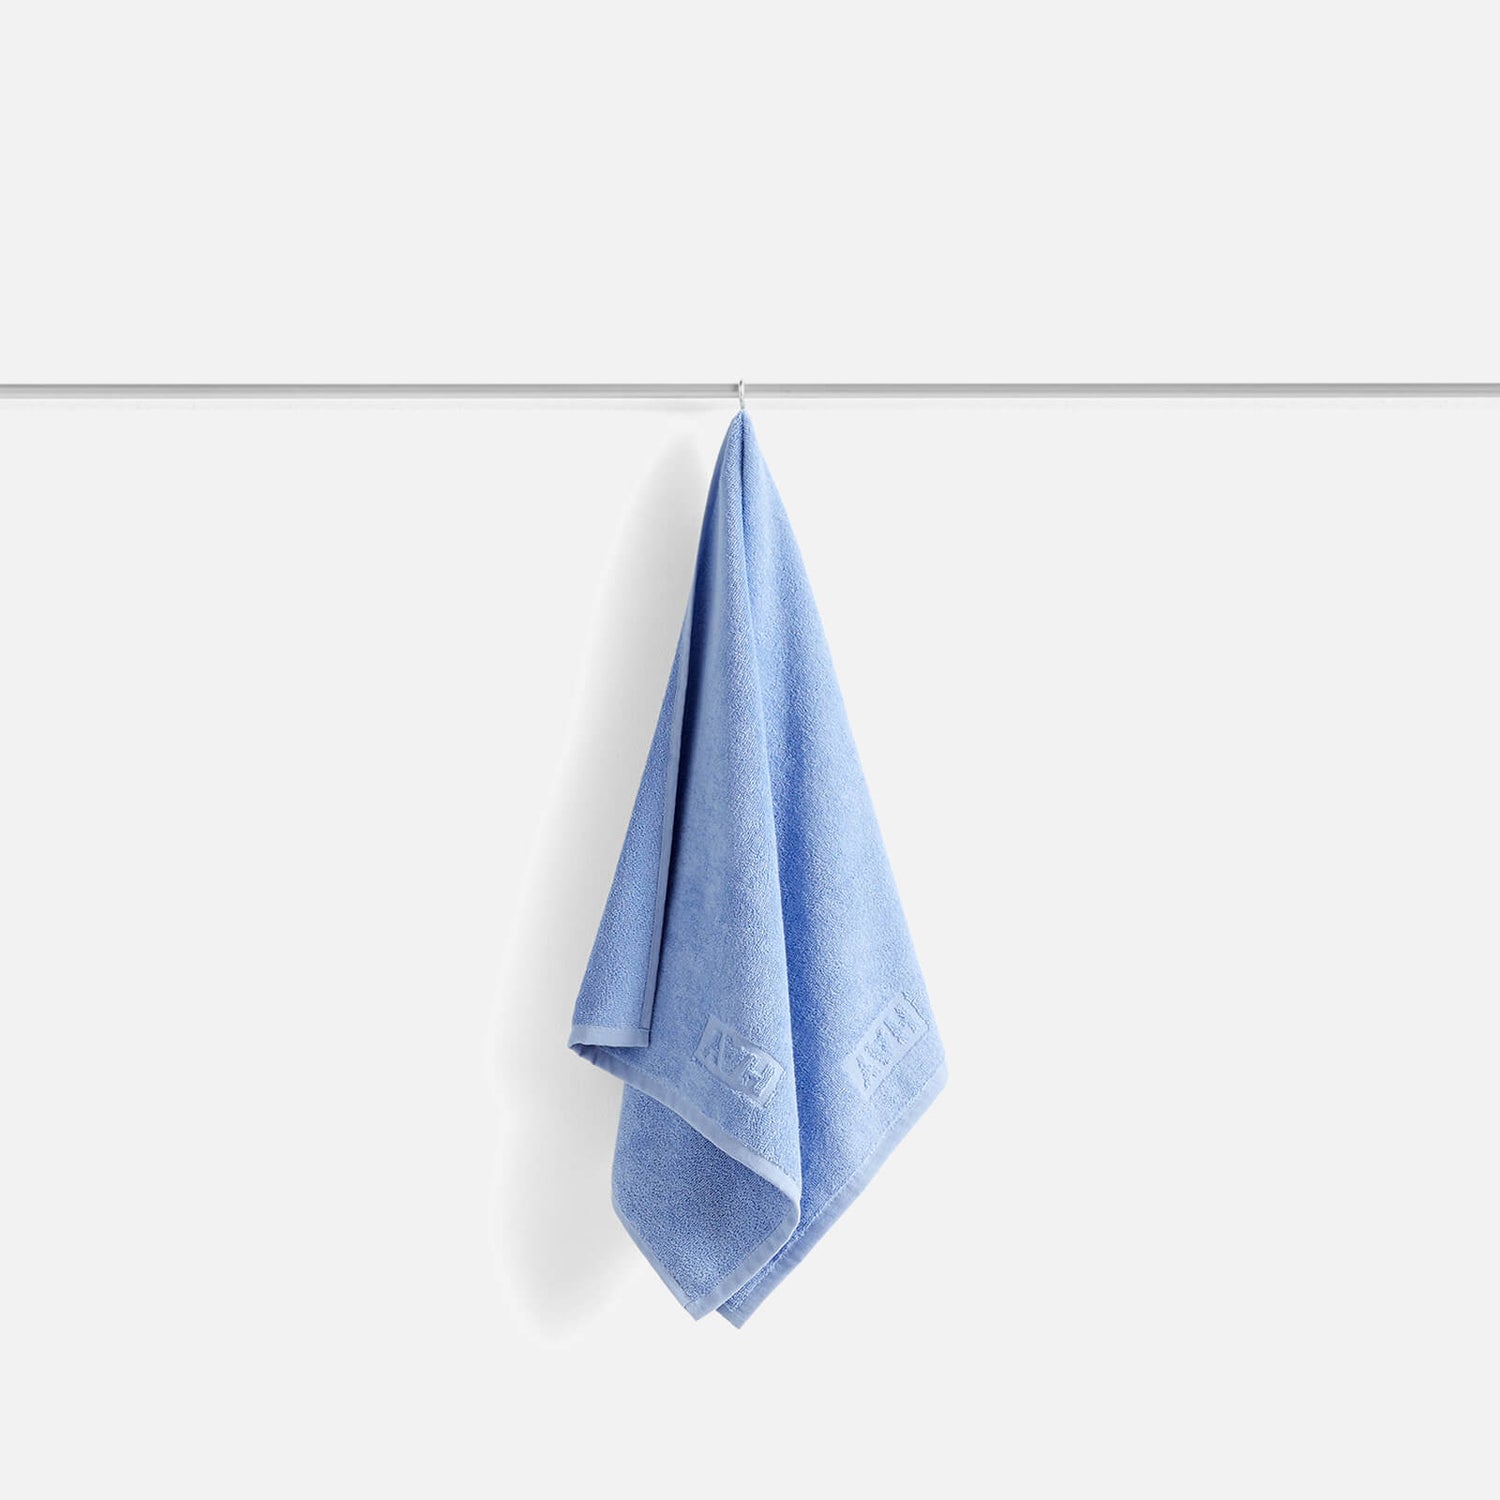 HAY Mono Towel - Sky Blue - Hand